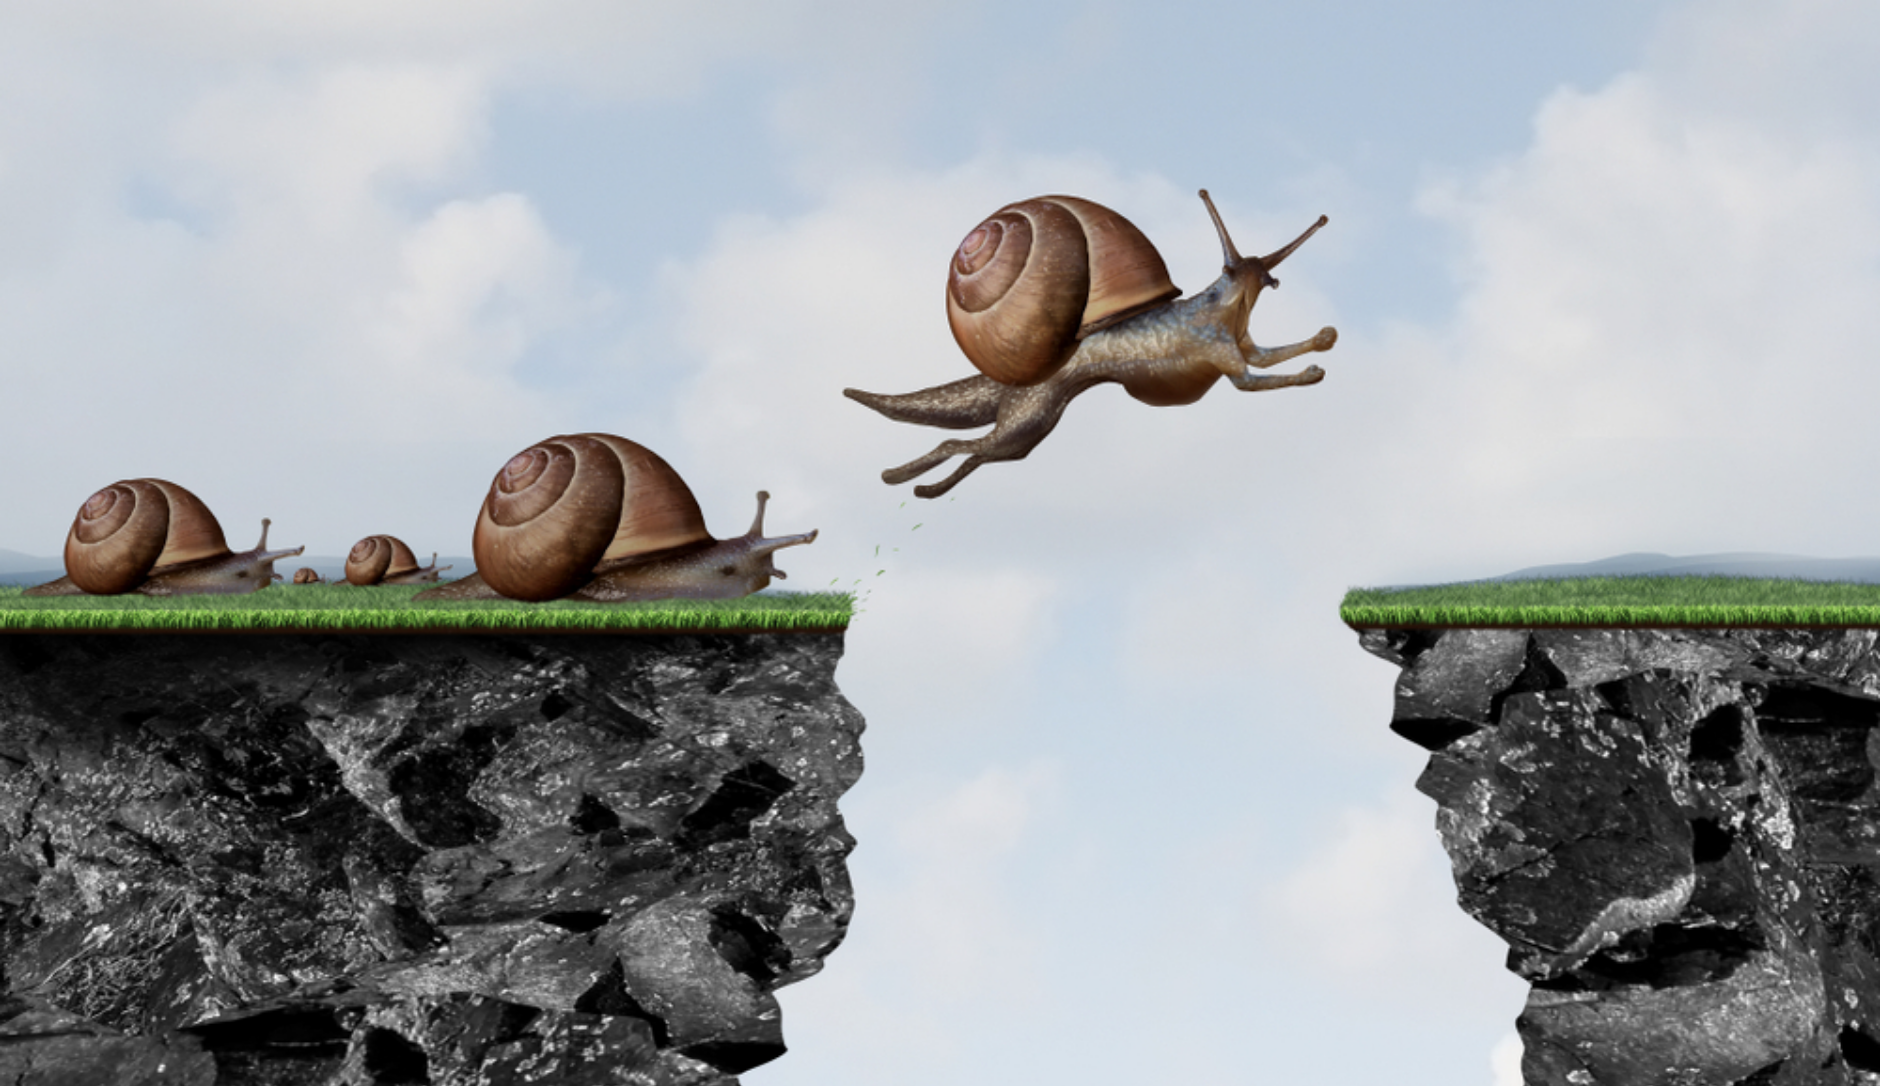 Can Snails Jump